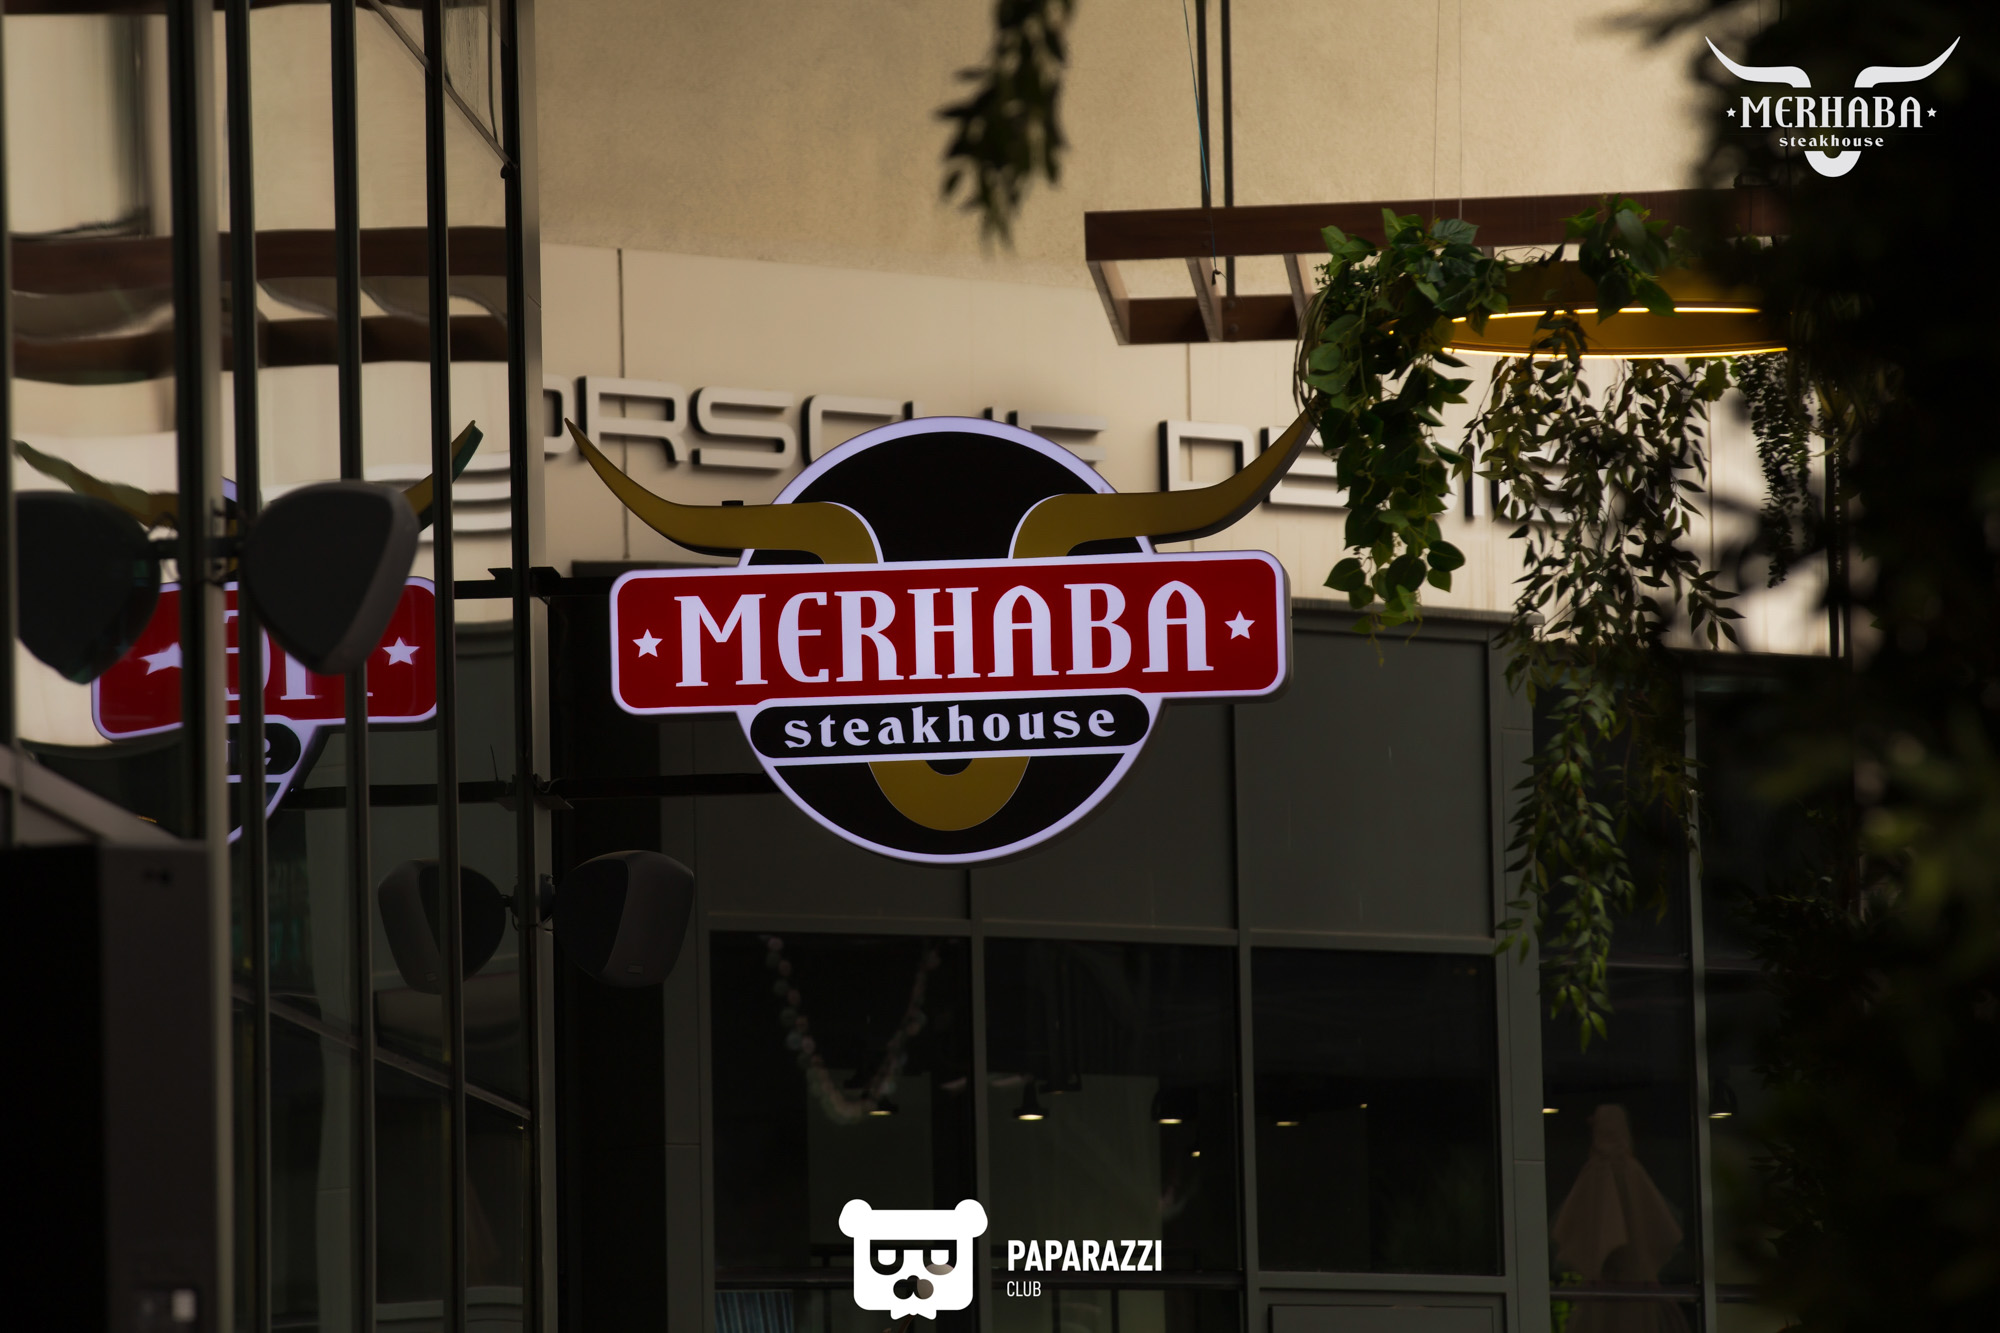 "MERHABA steak-house"